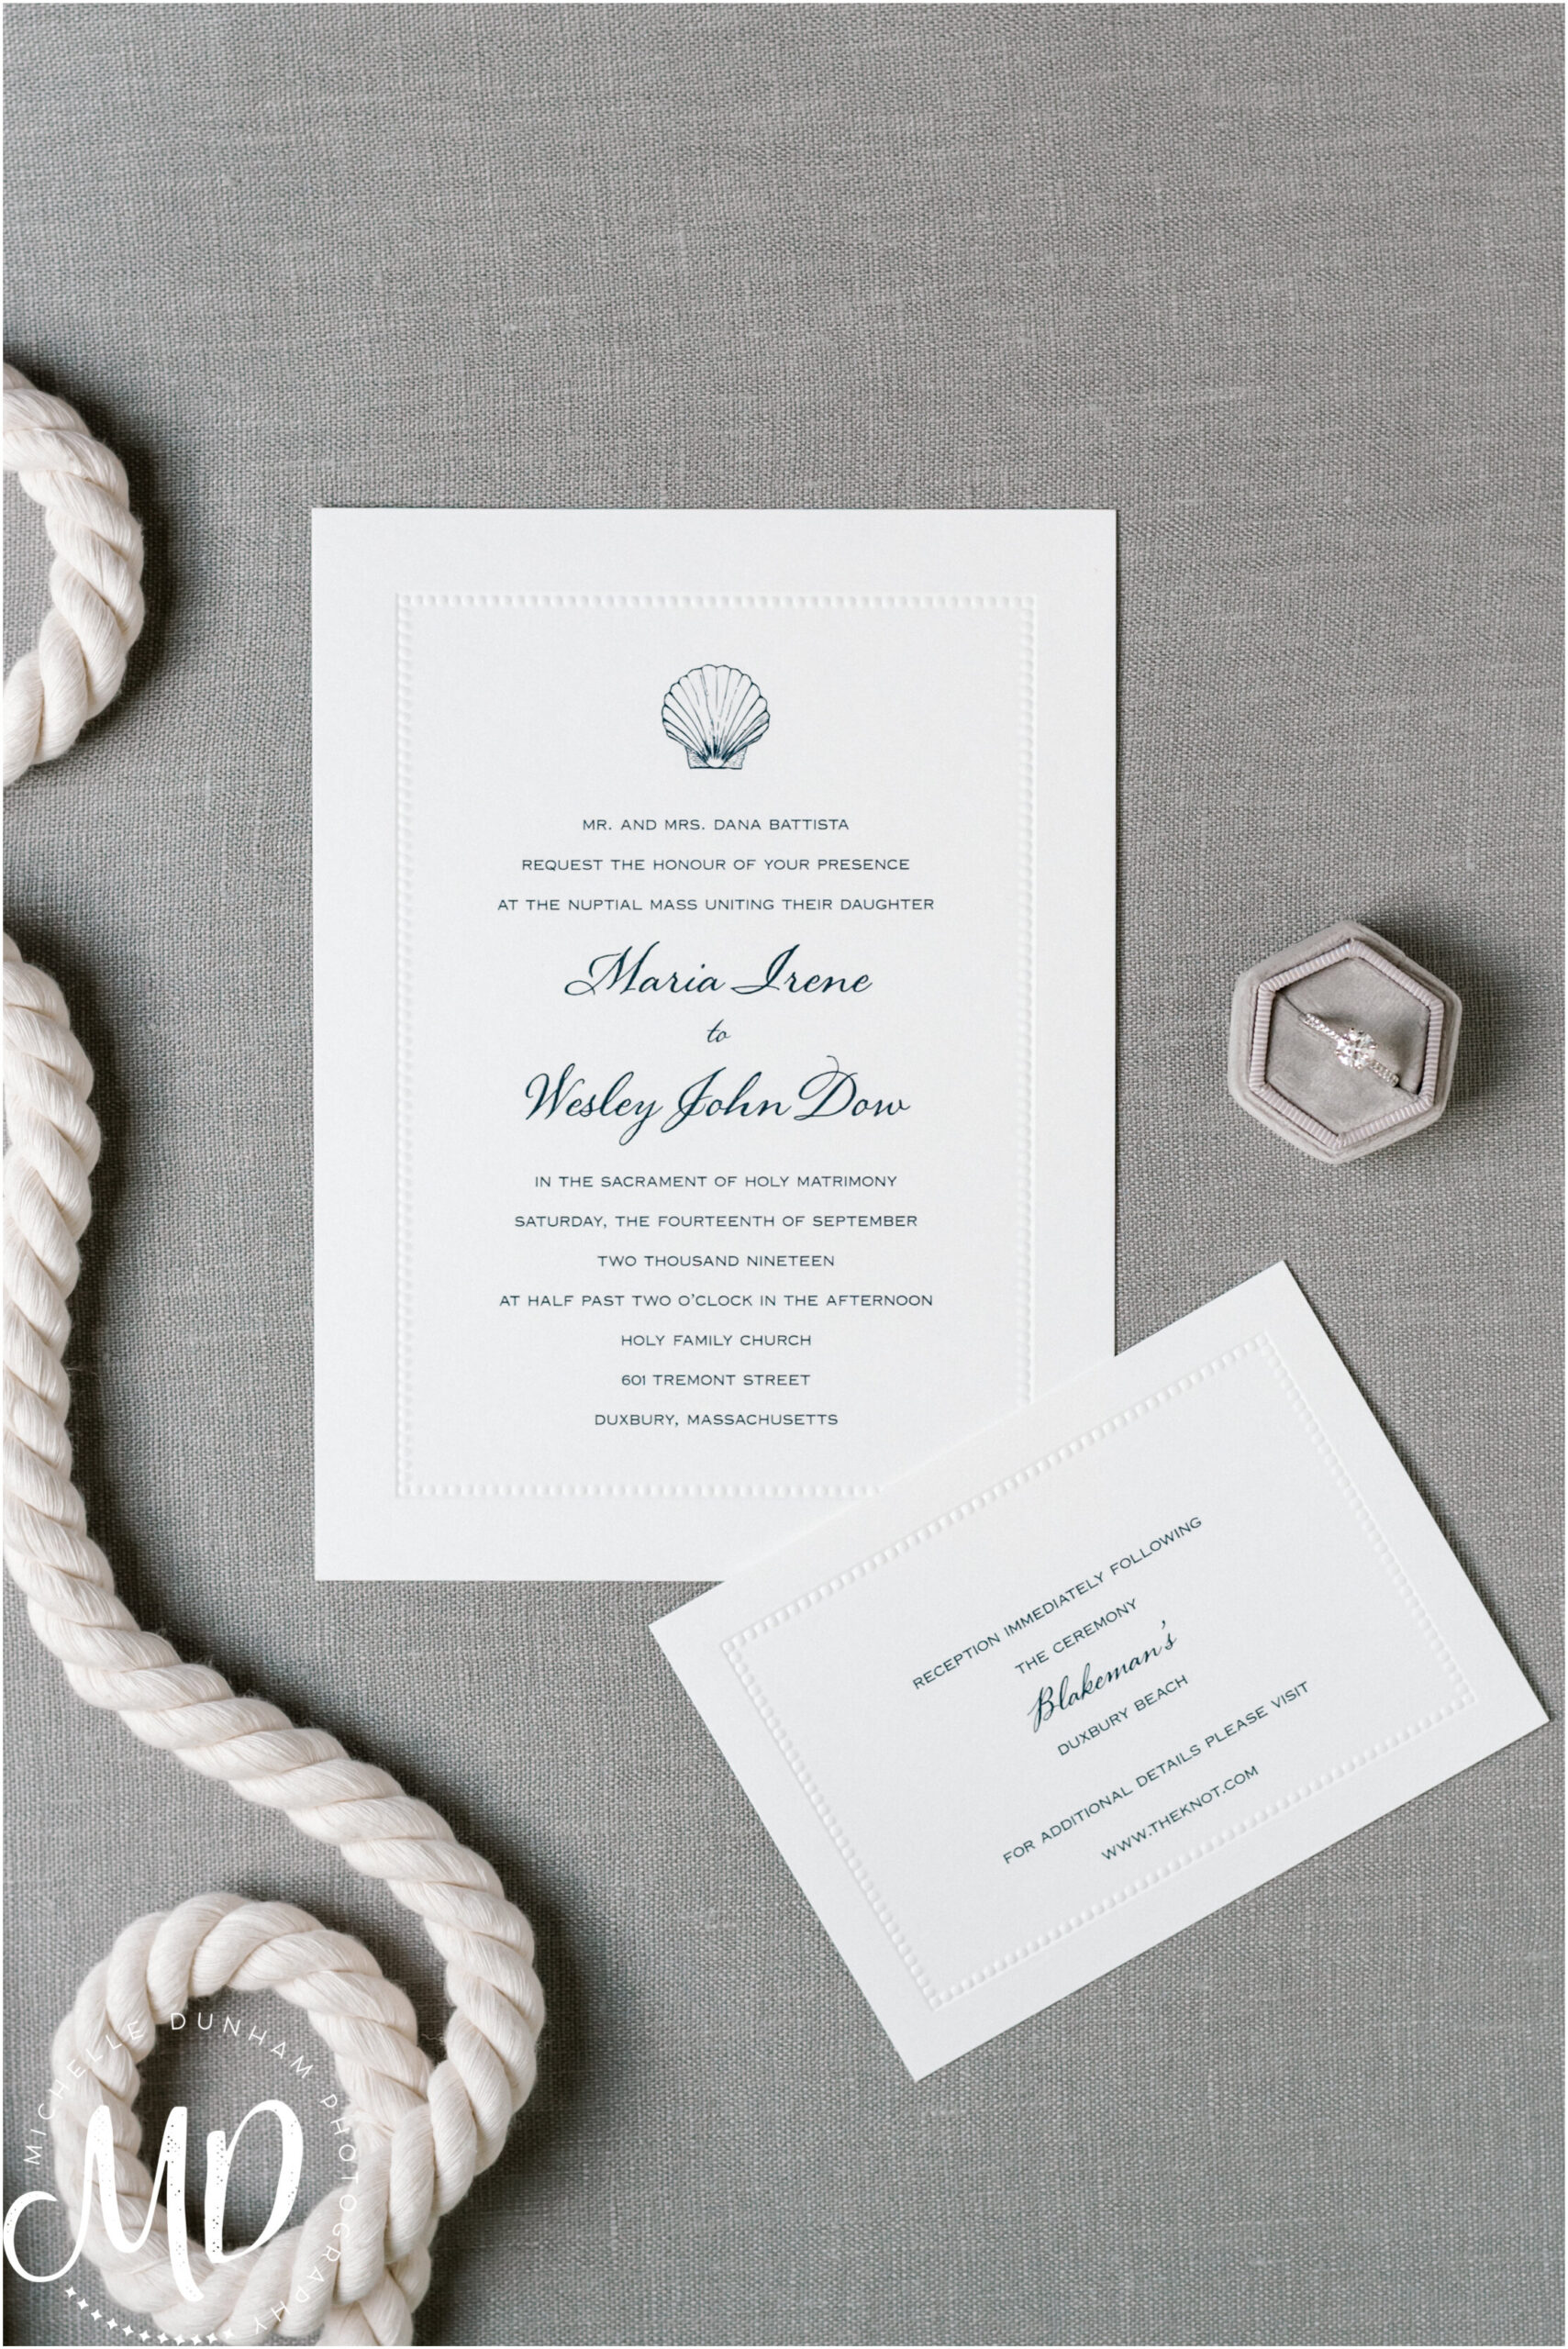 duxbury_powder_point_wedding__invitation.jpg